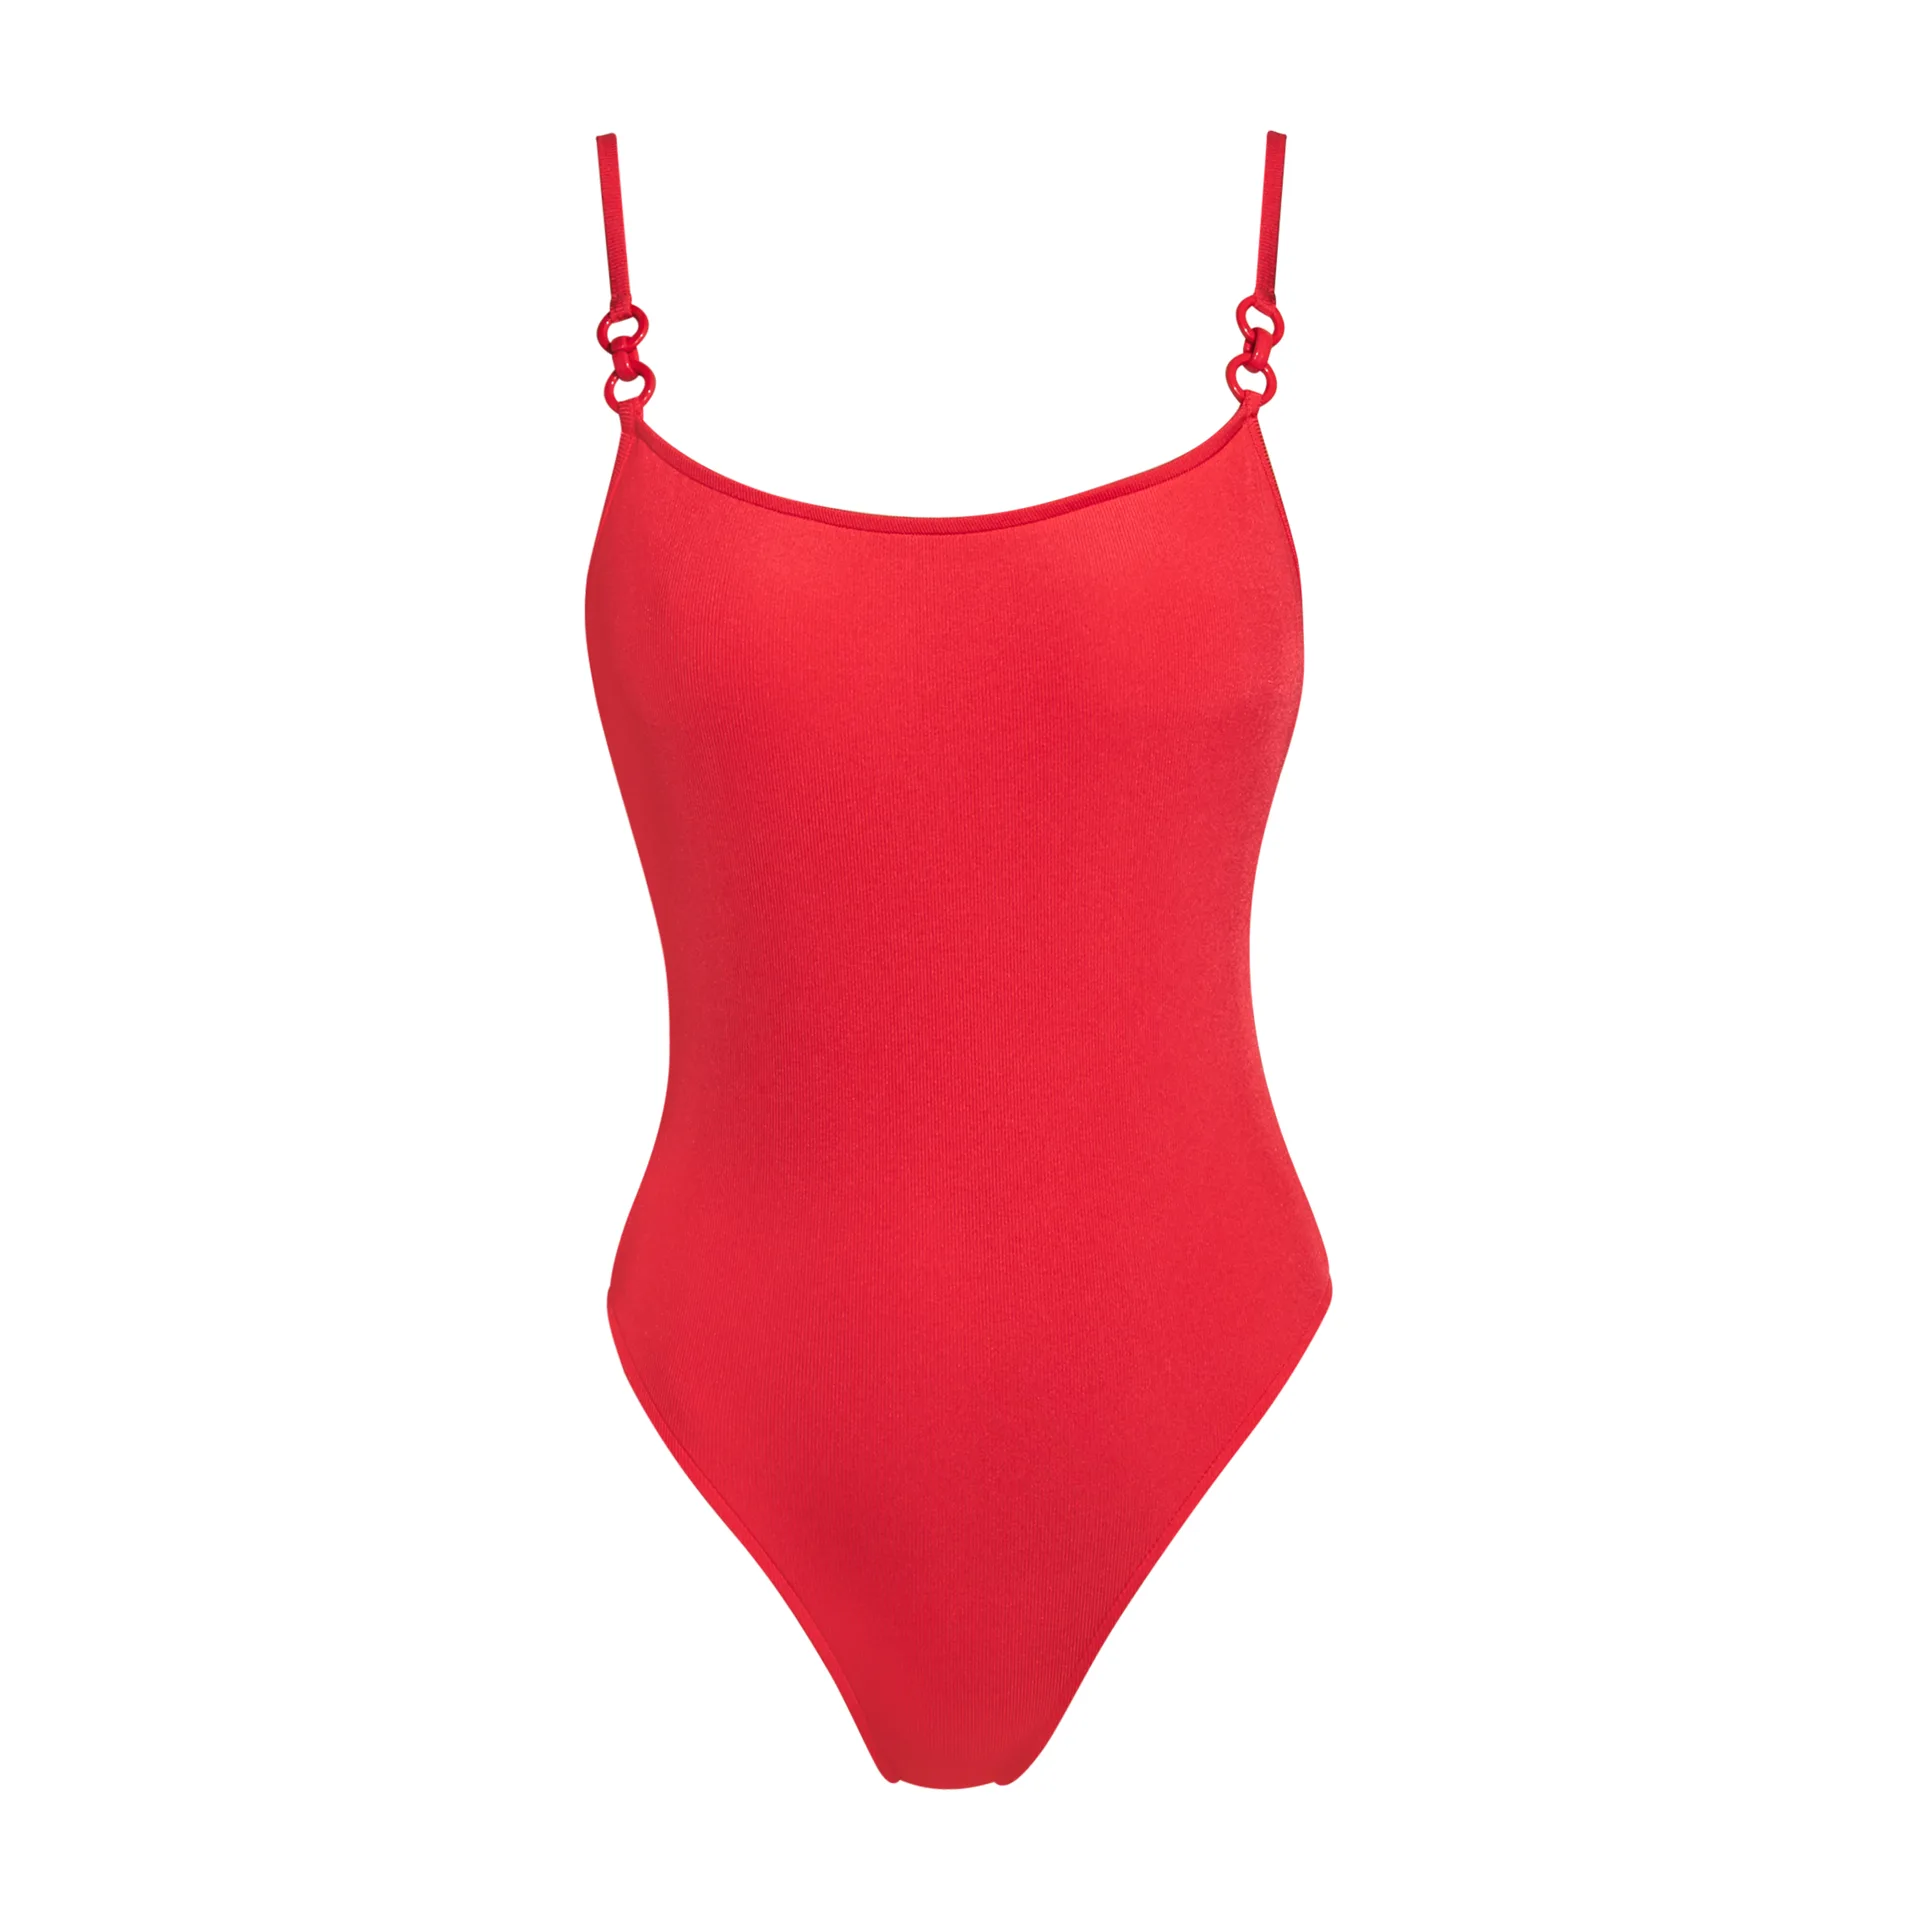 Andres Sarda Swimwear GRAY Red Swimsuit boat neck remov. pads